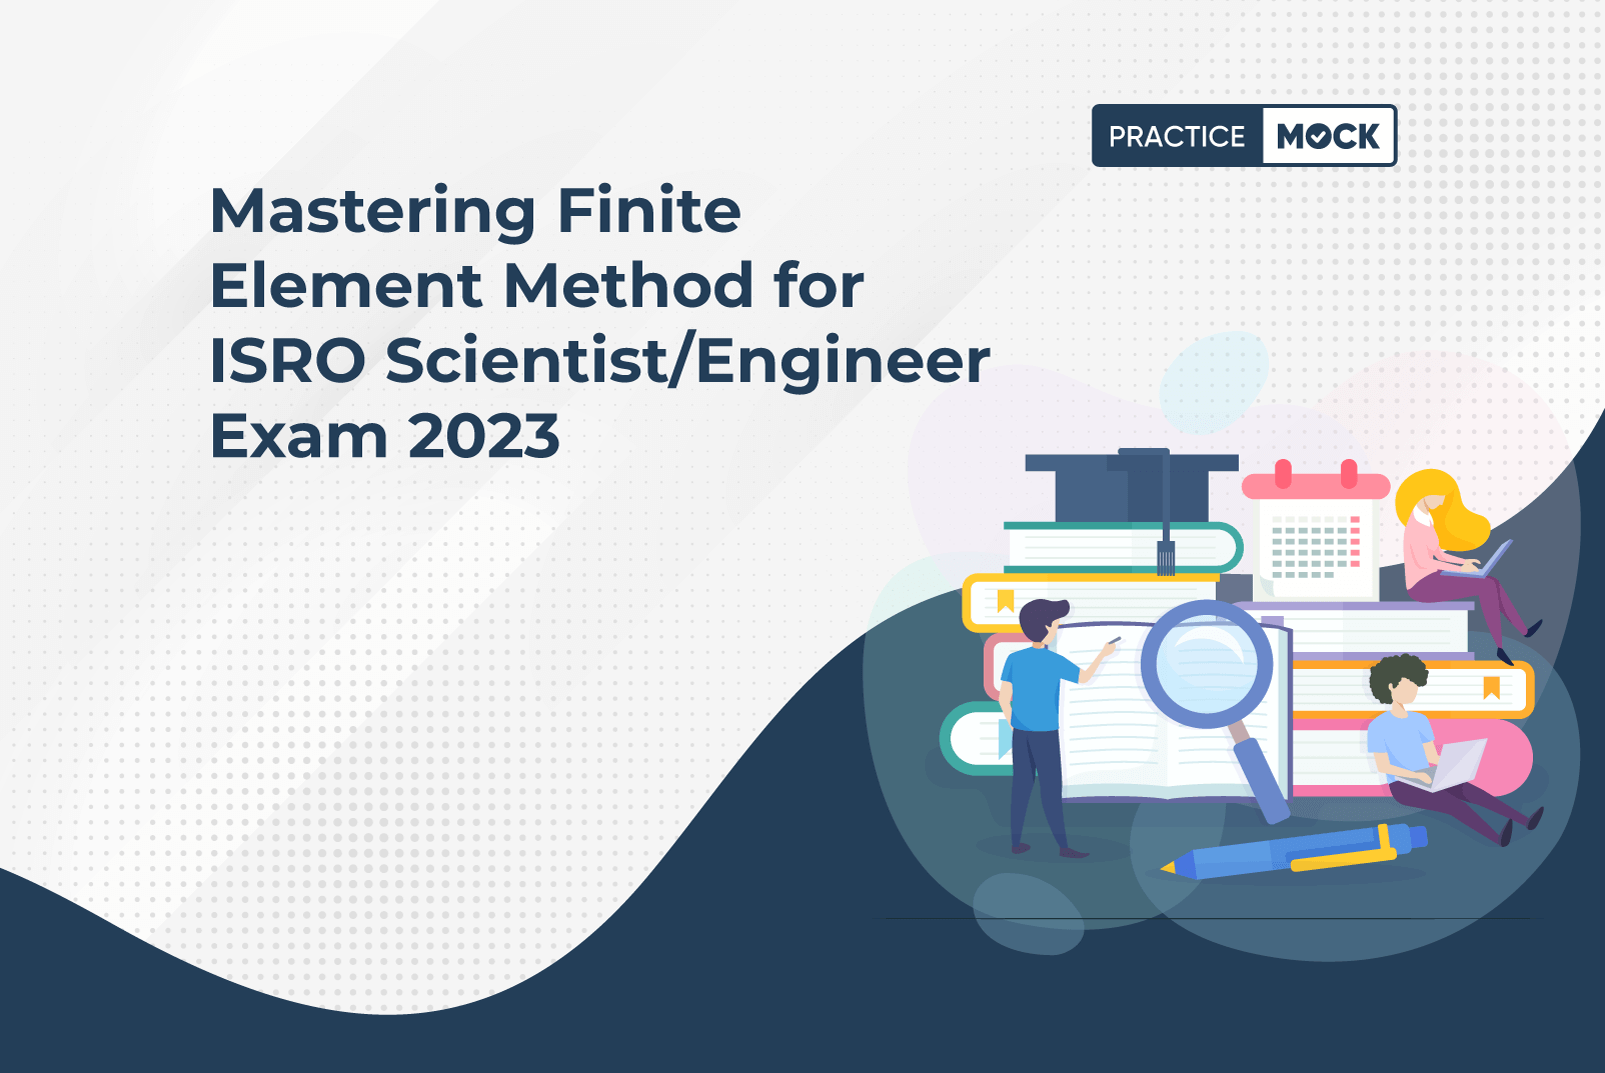 ISRO Scientist/Engineer Exam 2023-10 Expected Questions on Finite Element Method